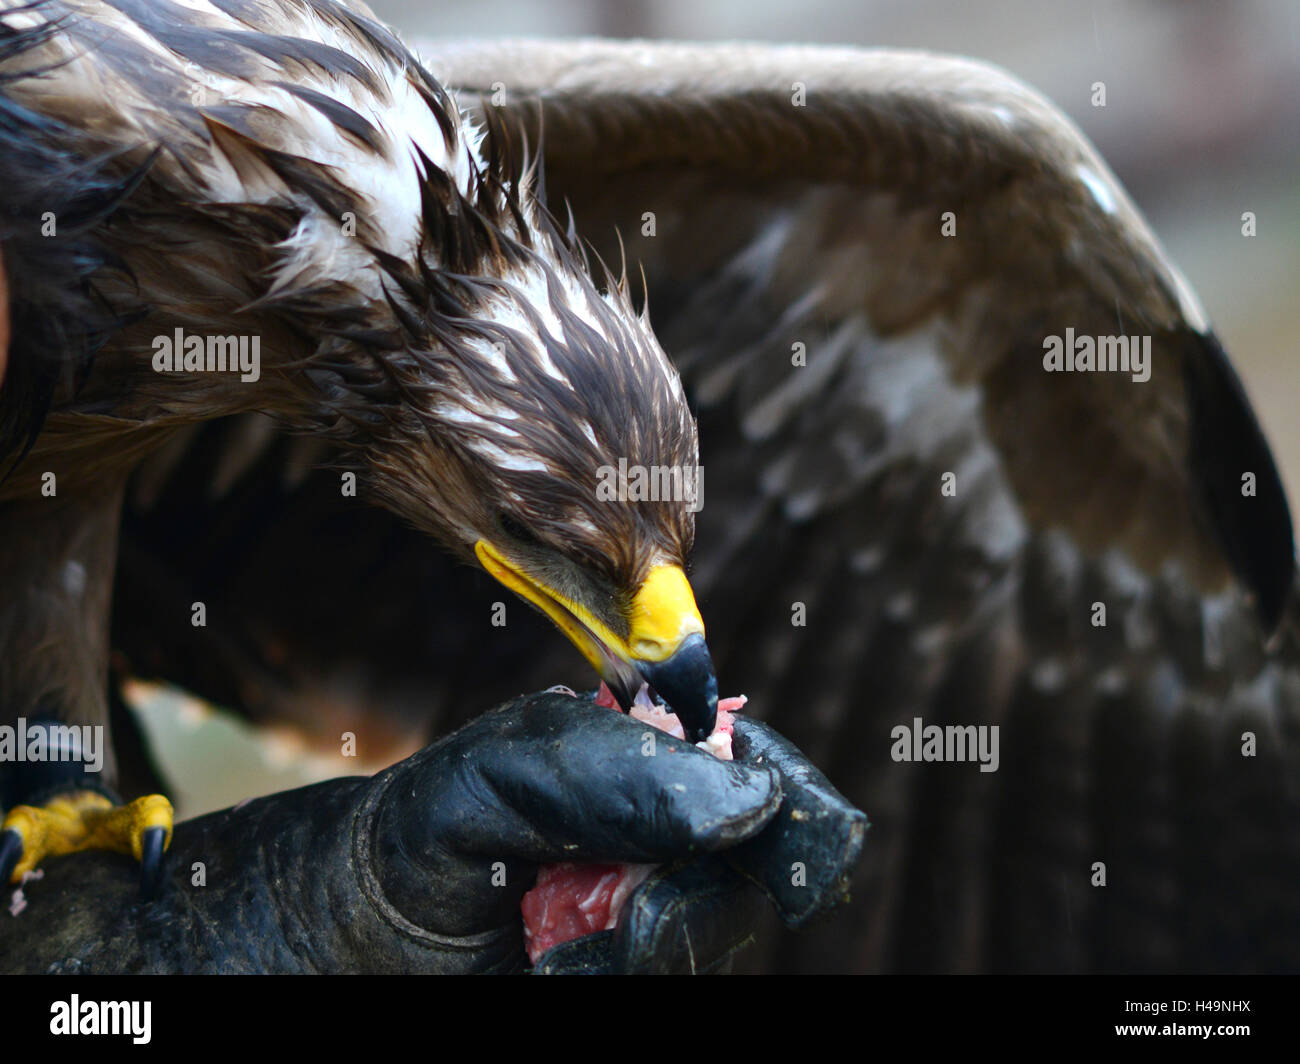 hawk eating flesh from bird fancier hand Stock Photo